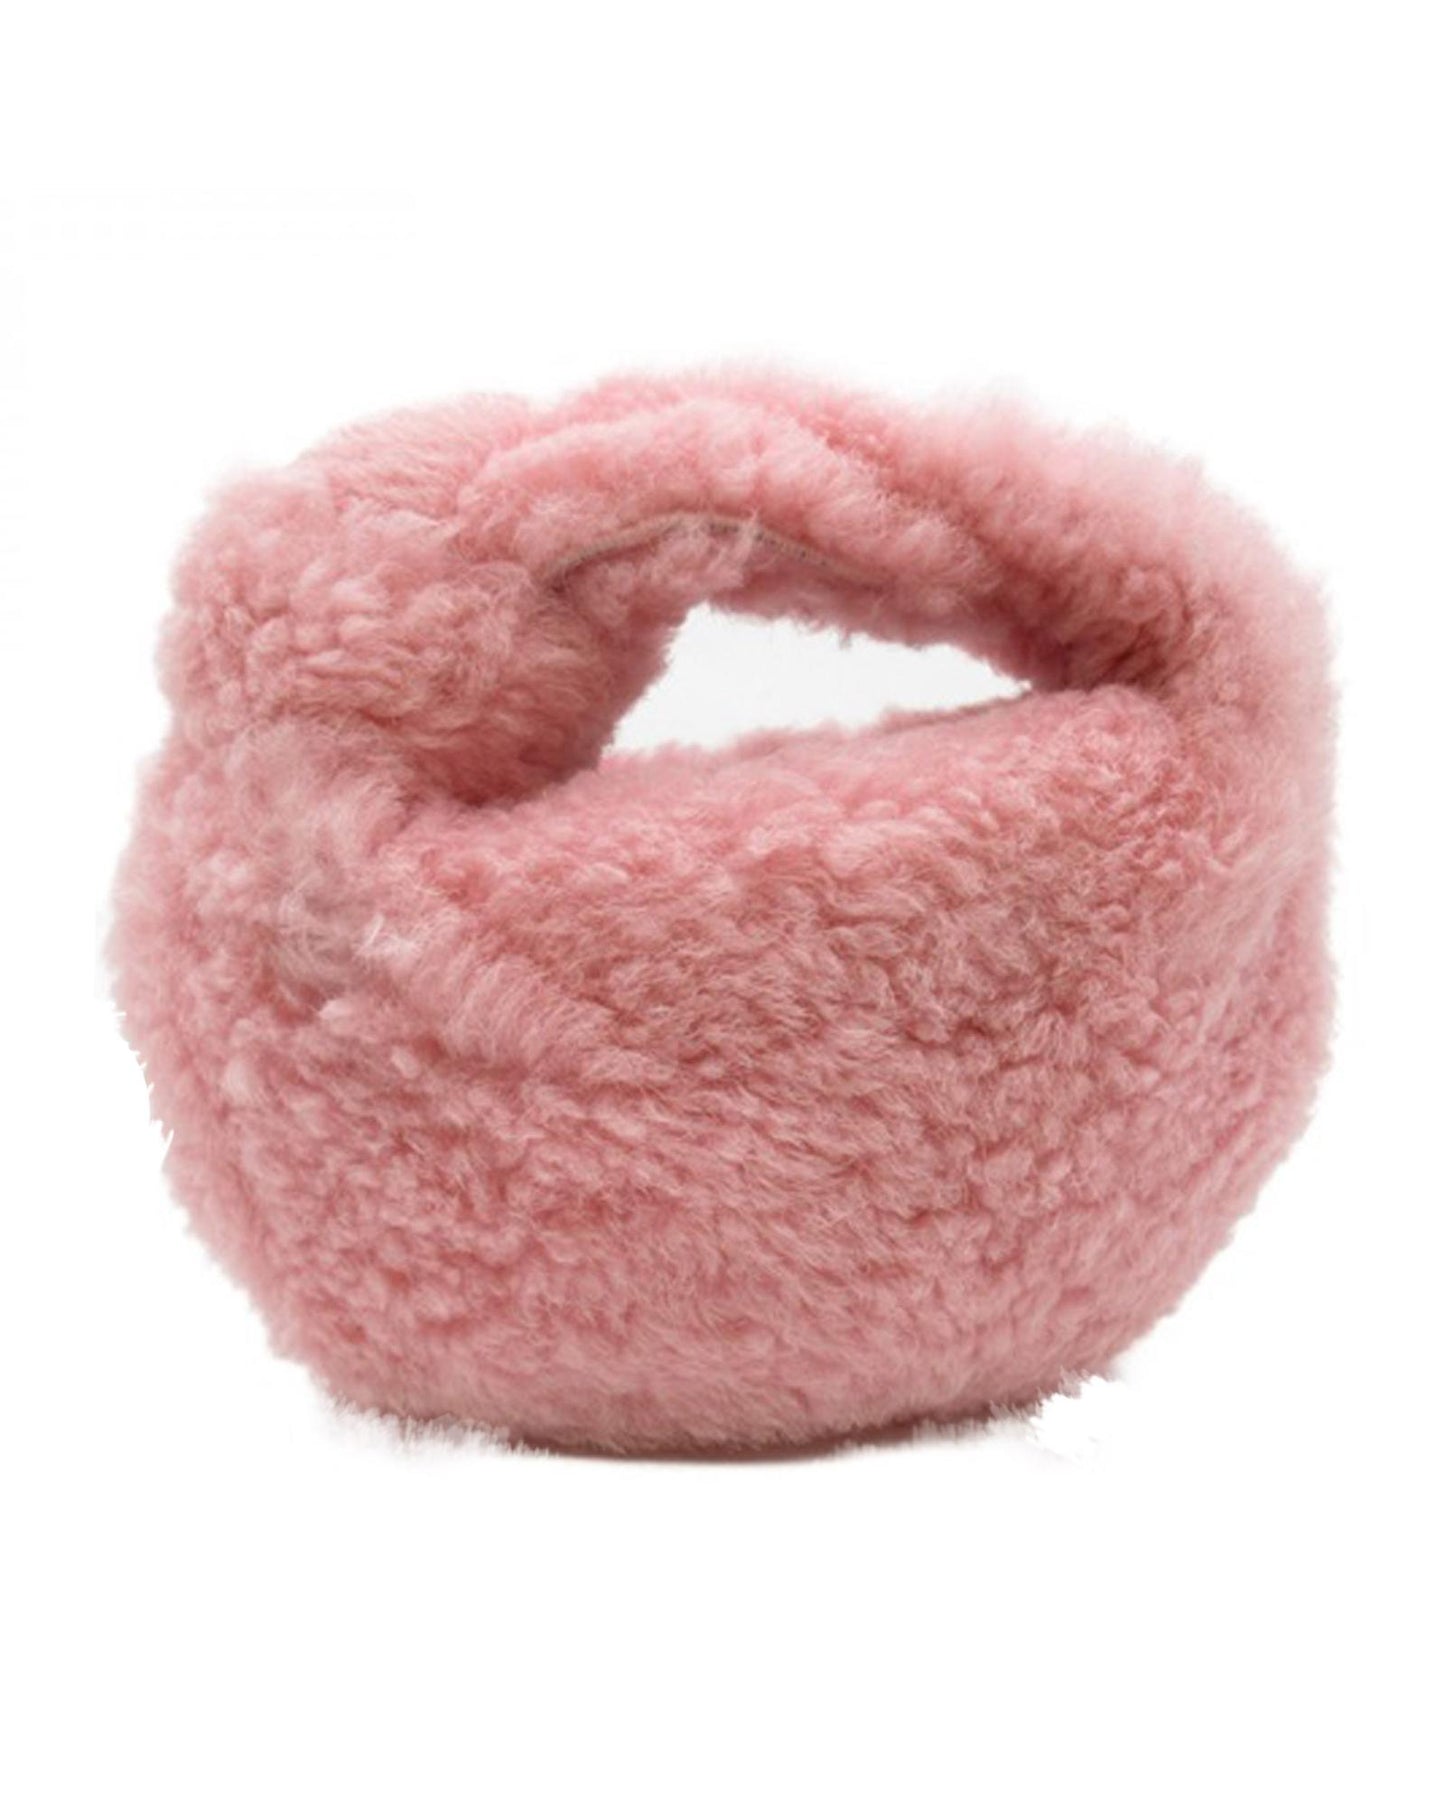 Bottega Veneta Women's Shearling Knotted Mini Zipper Bag in Pink